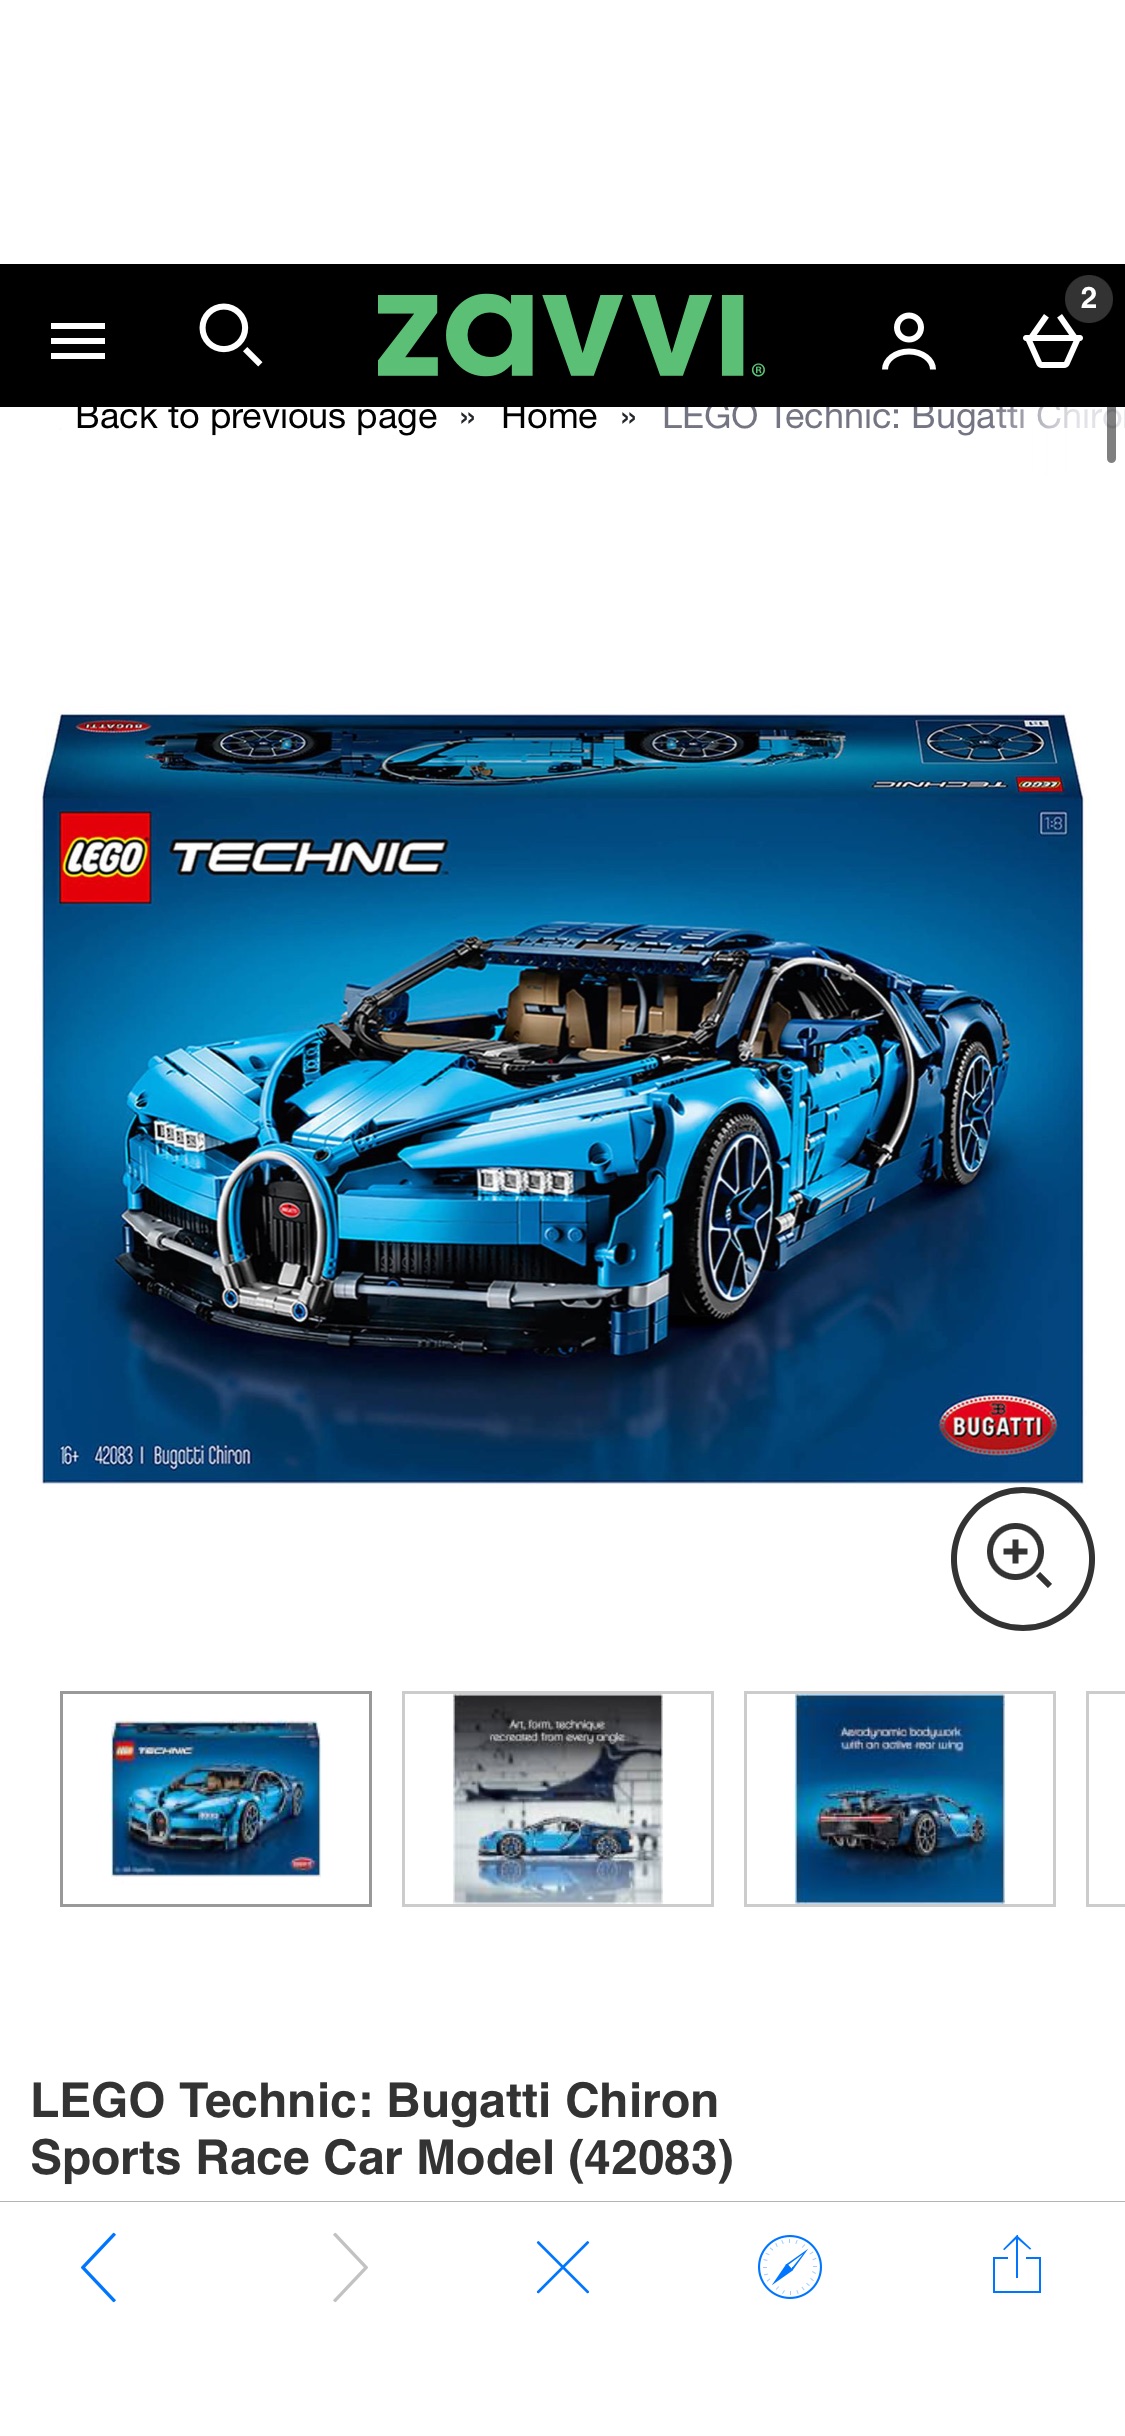 LEGO Technic: Bugatti Chiron Sports Race Car Model (42083) Toys - Zavvi US